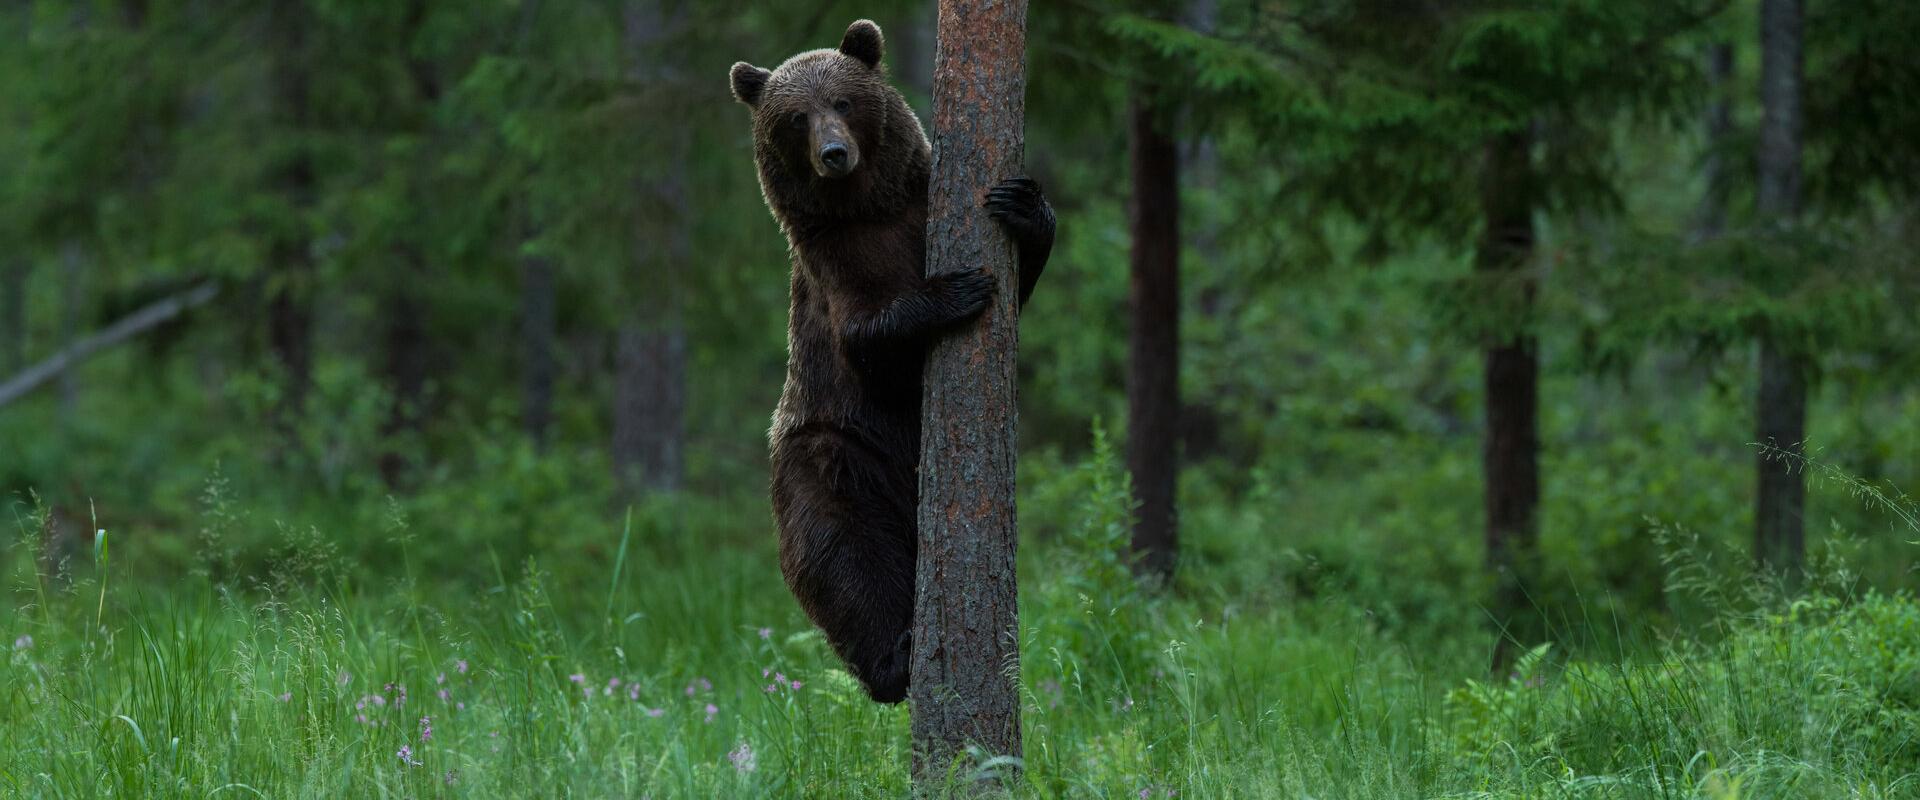 Bear in Estonia